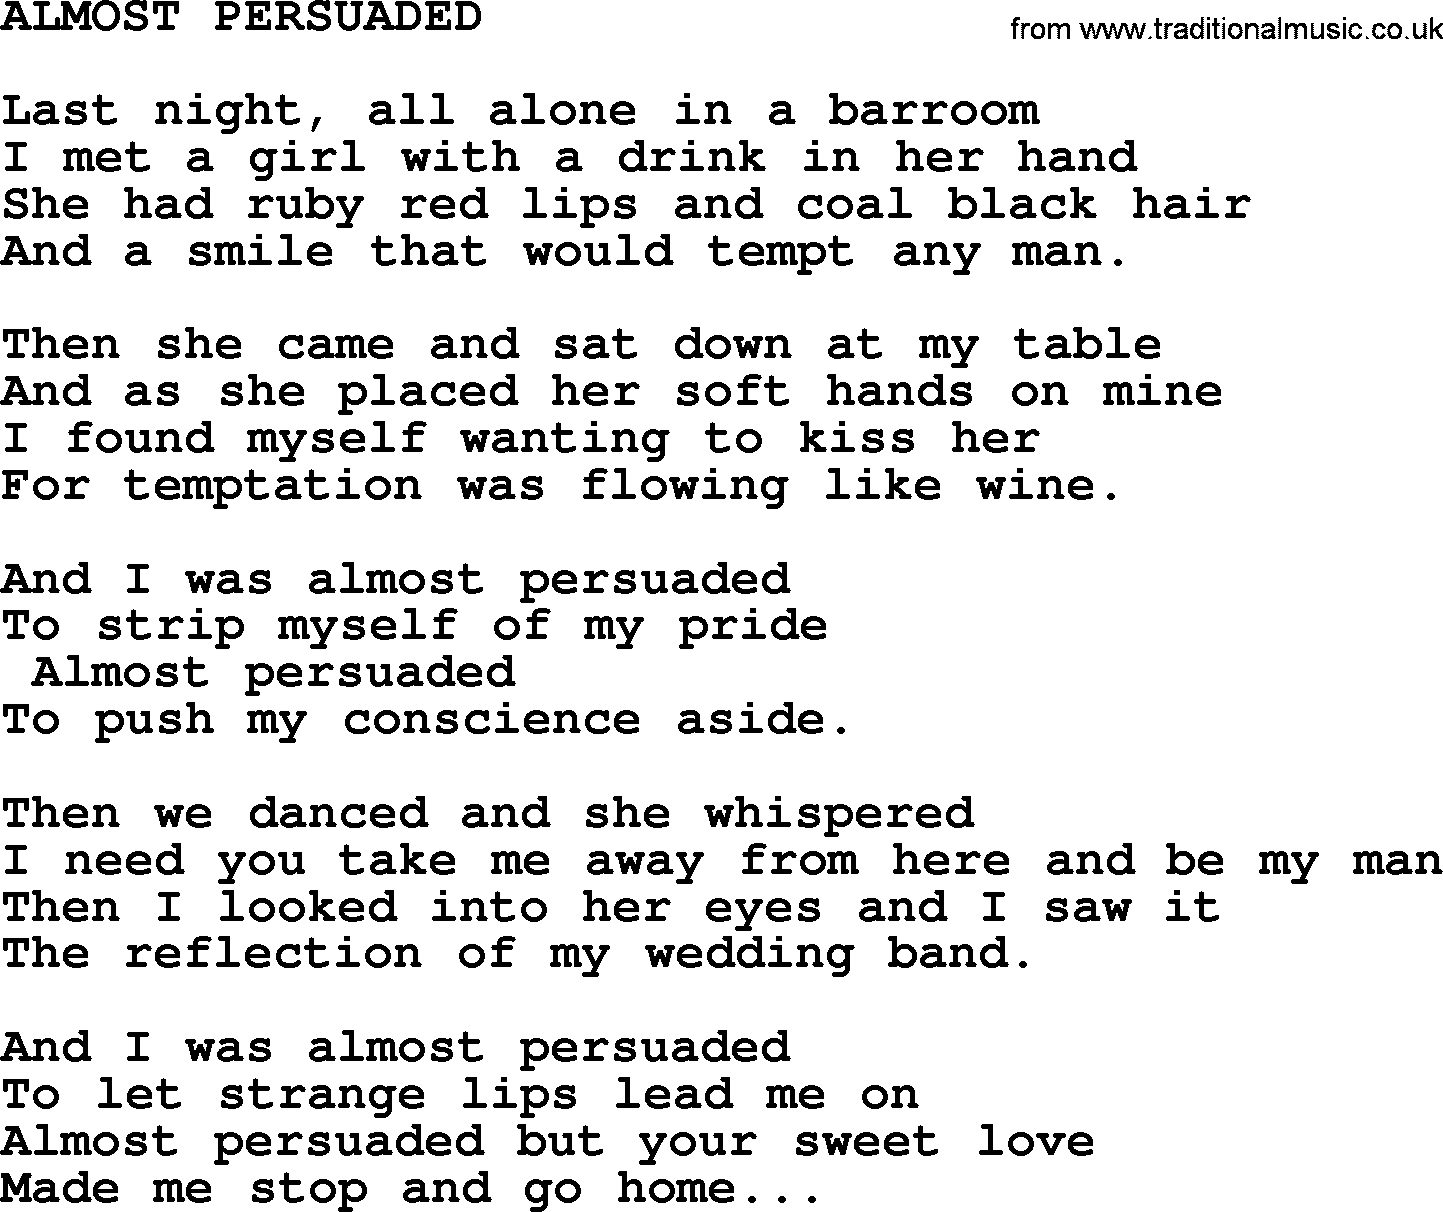 Merle Haggard song: Almost Persuaded, lyrics.